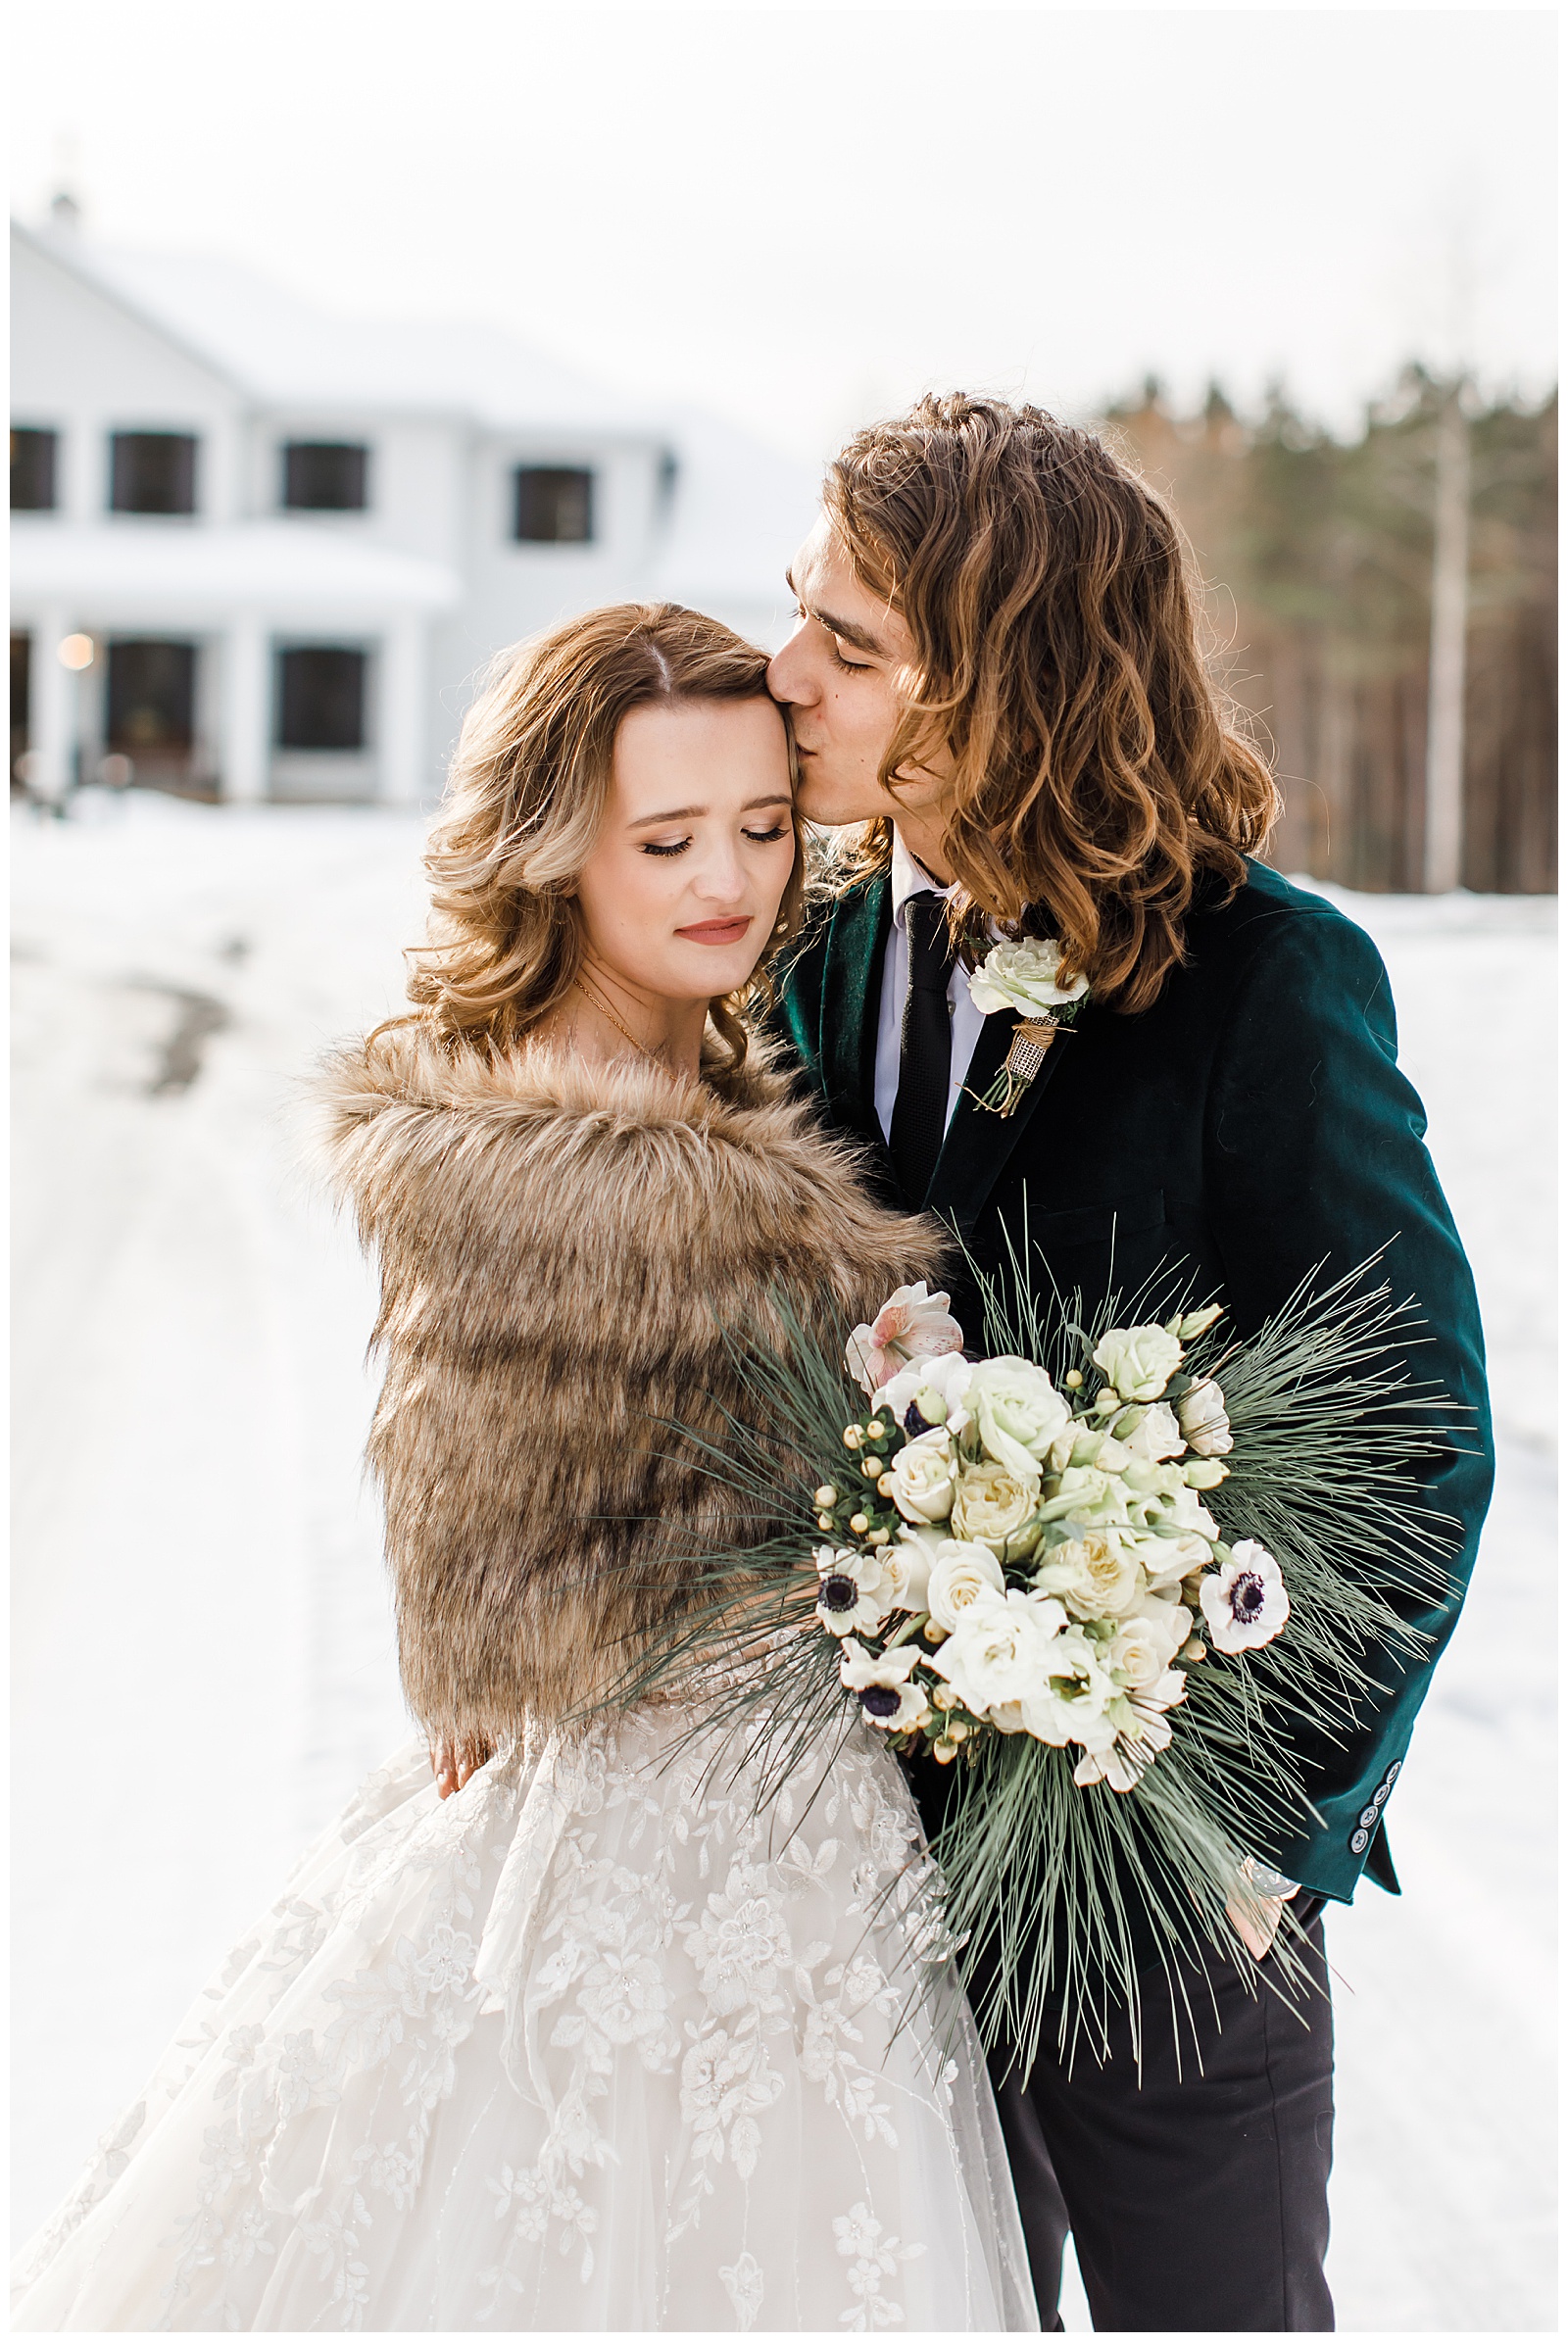 antebellum-of-new-kent-winter-wedding-inspiration-ch-sh-fredericks-photography_0025.jpg